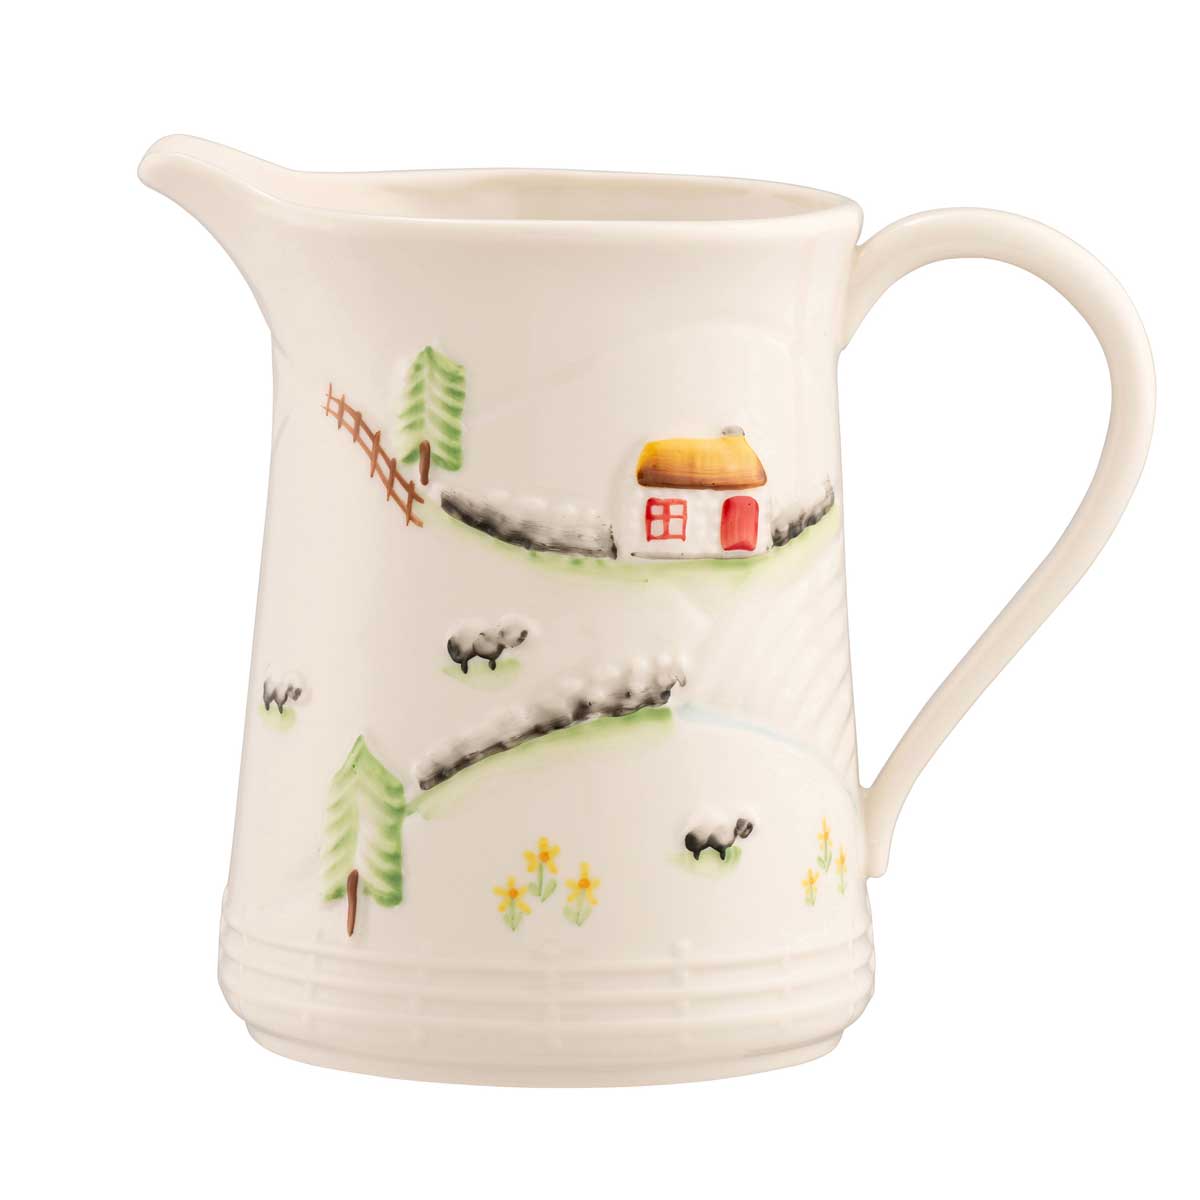 Product image for Belleek Pottery | Connemara Jug